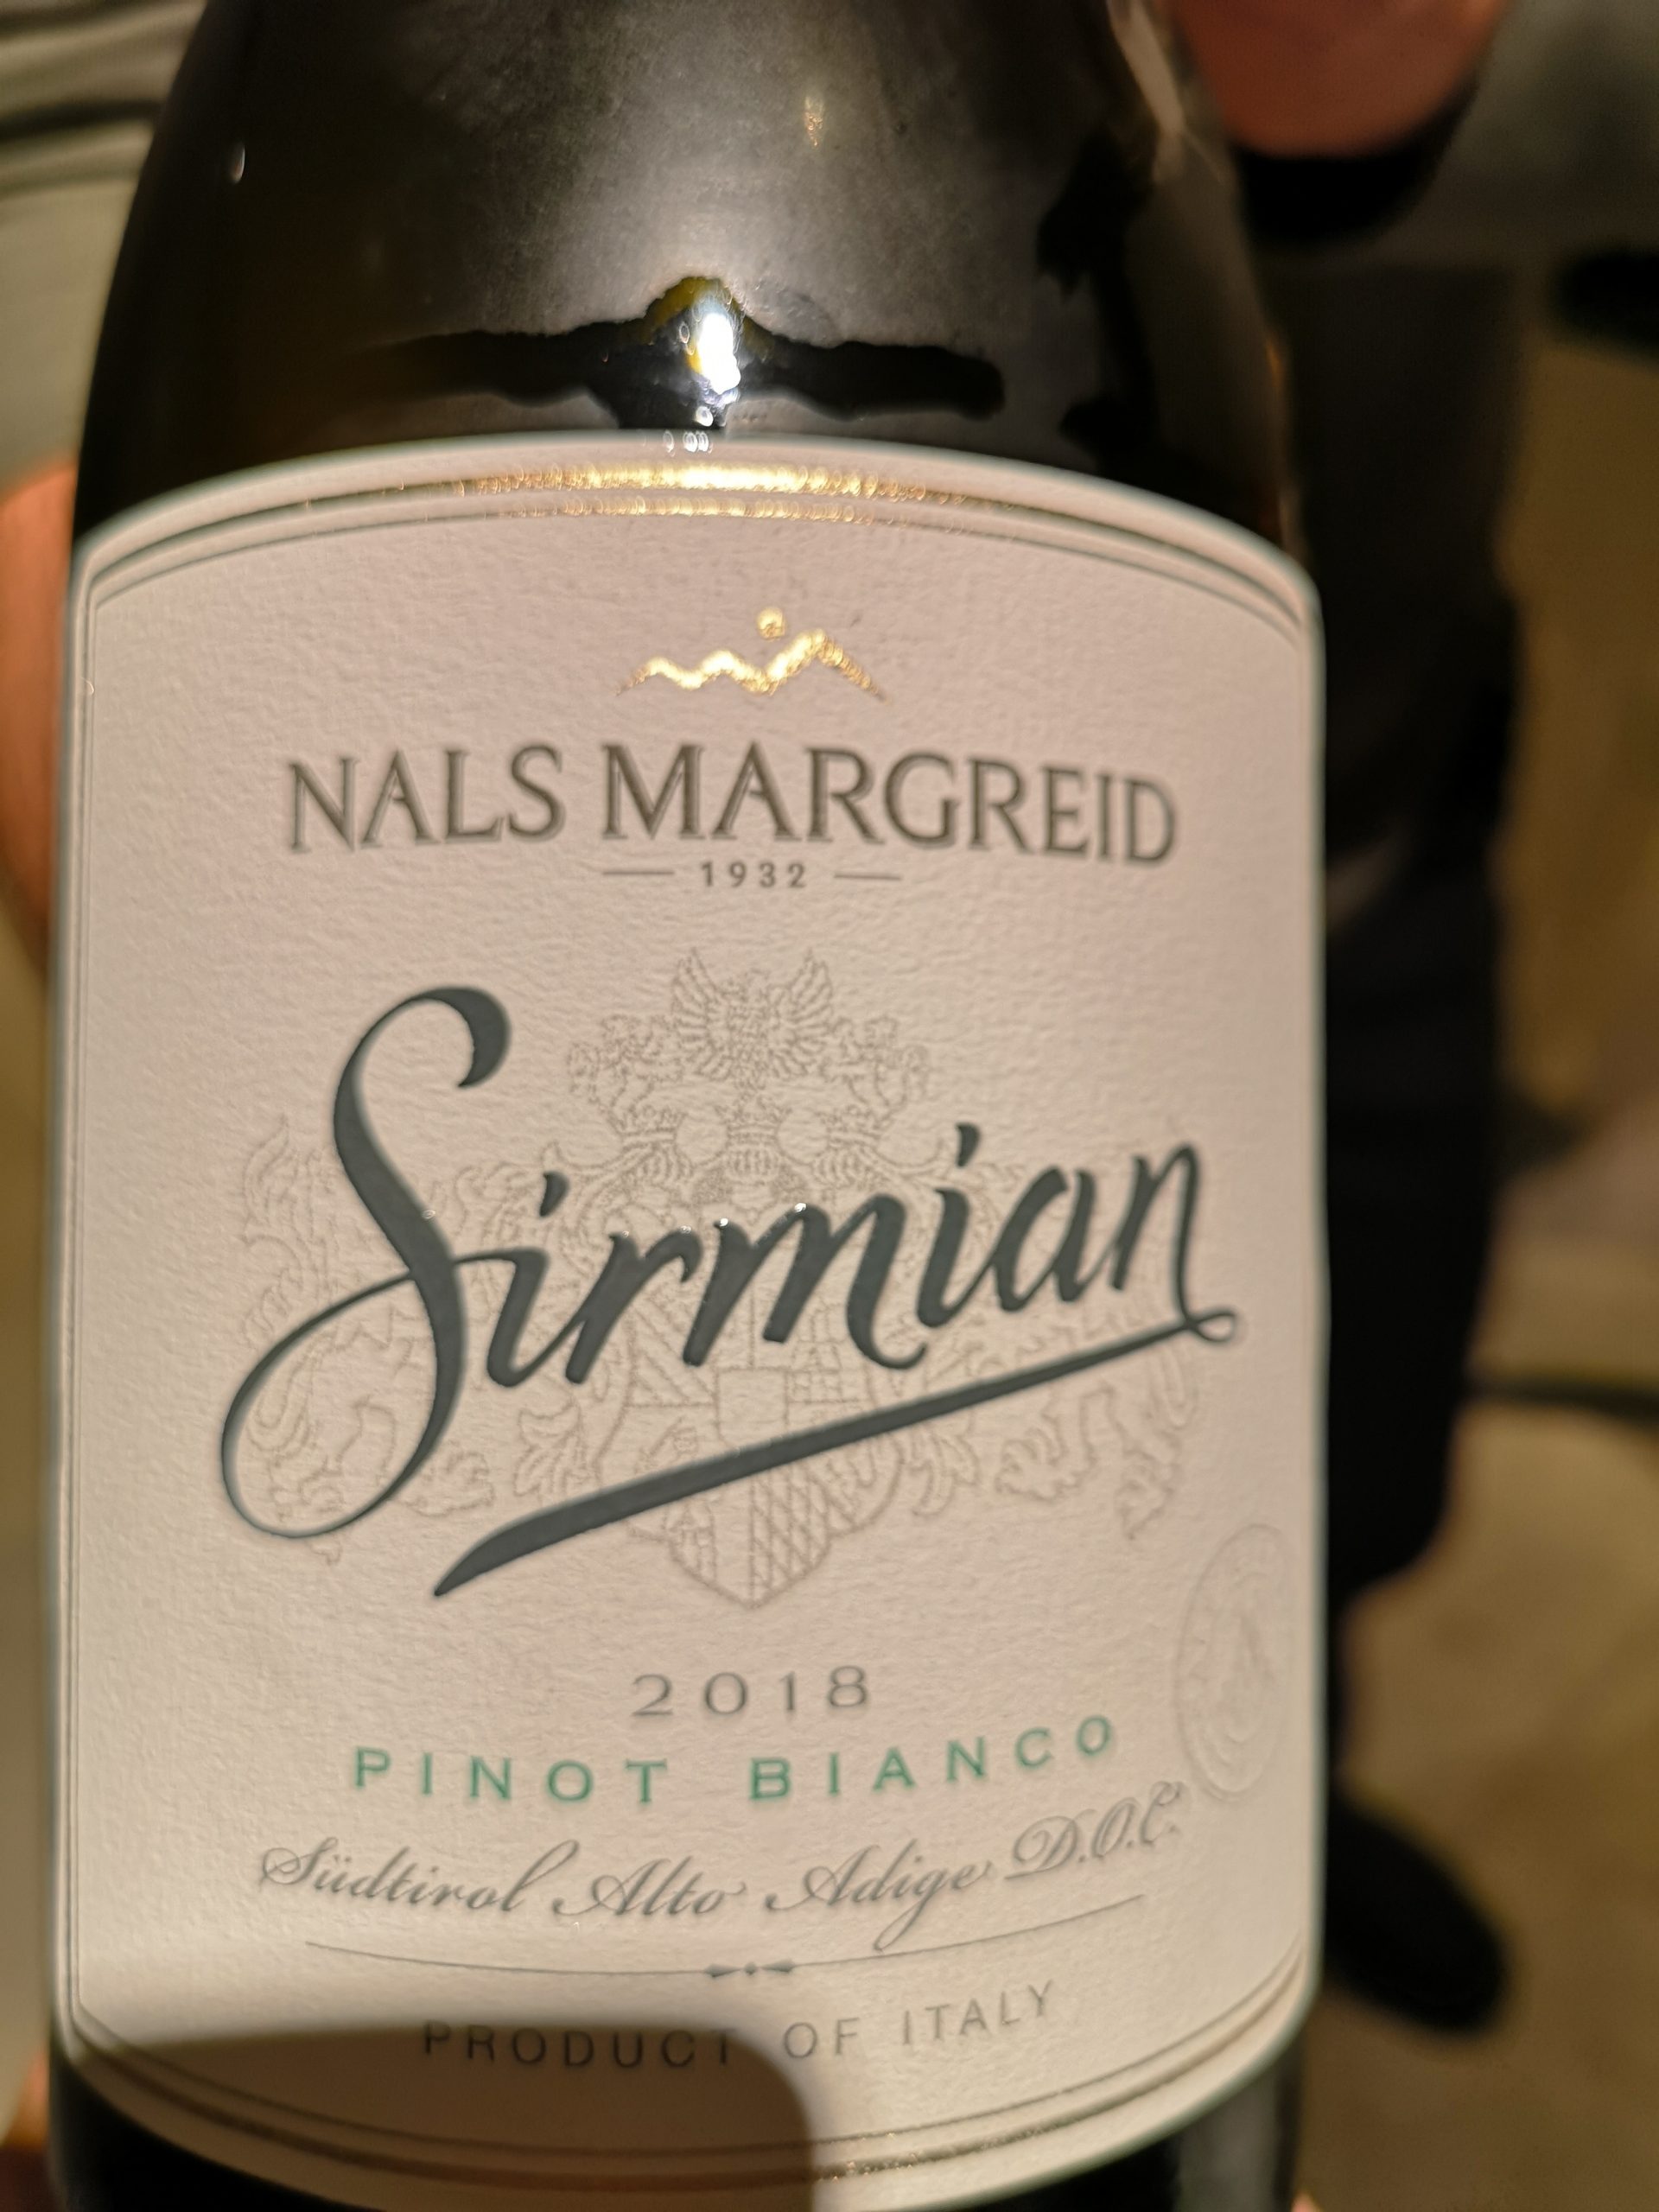 2018 Pinot Bianco Sirmian | Nals Margreid